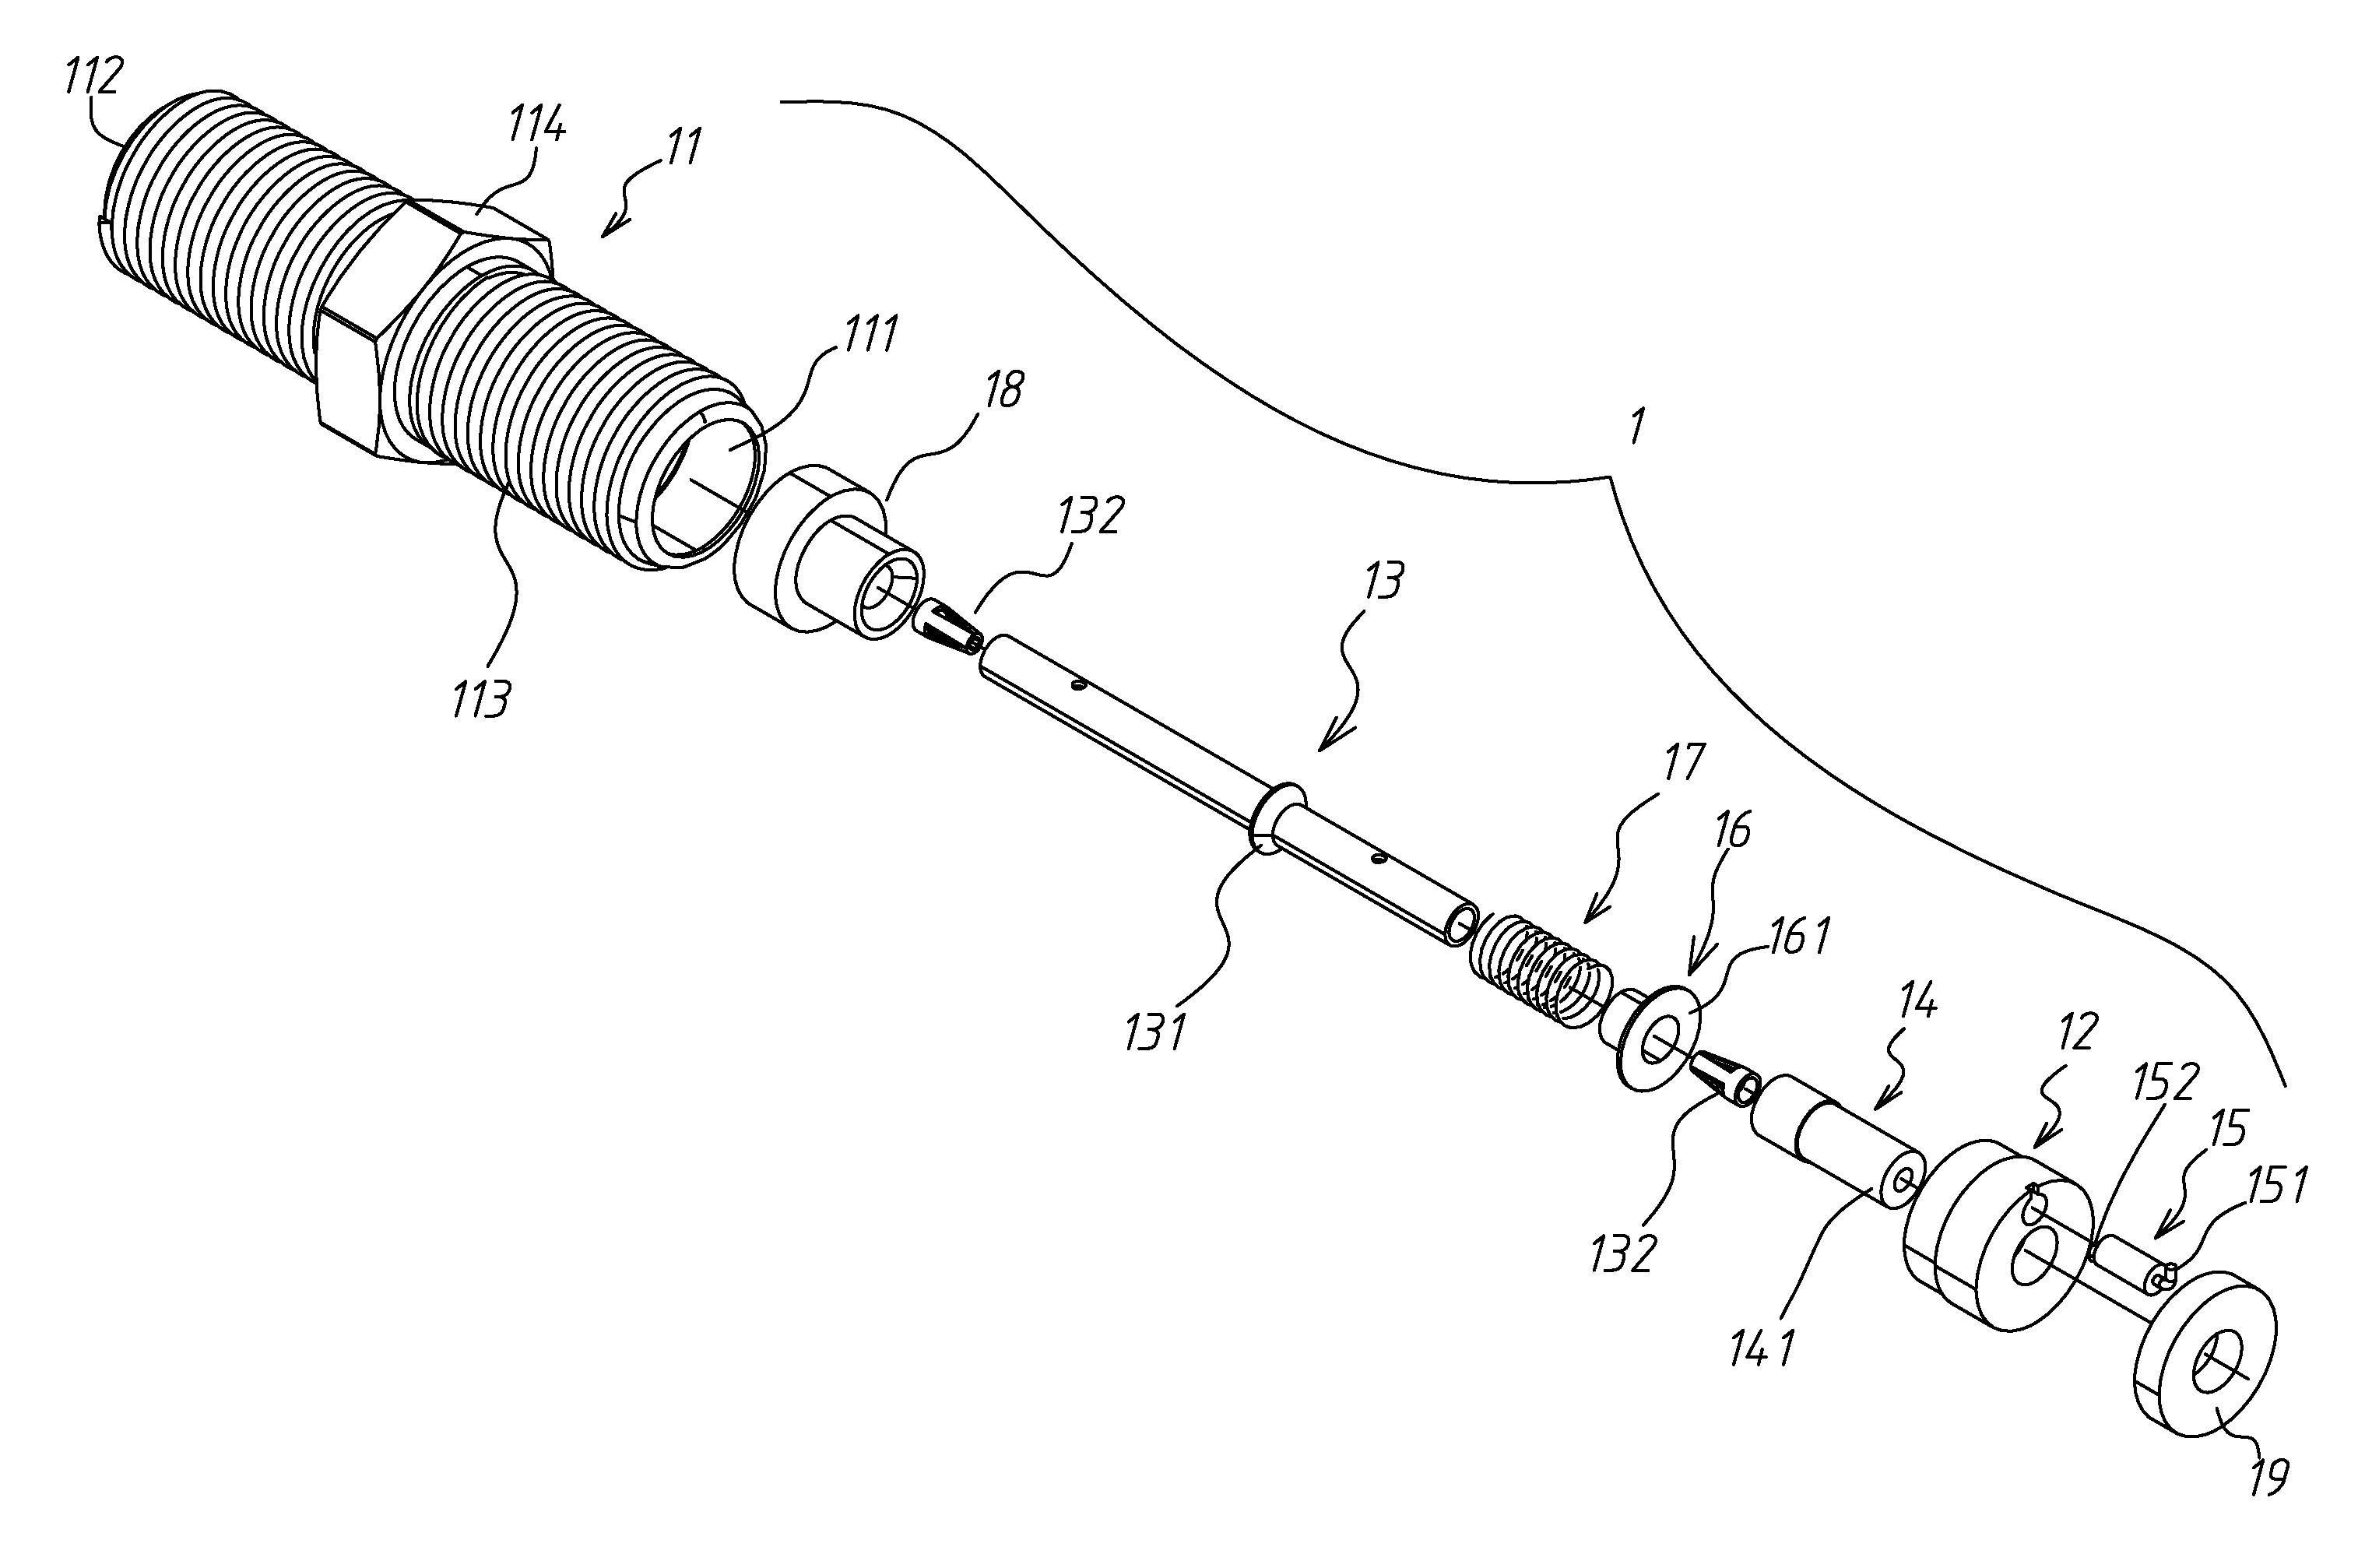 RF connector